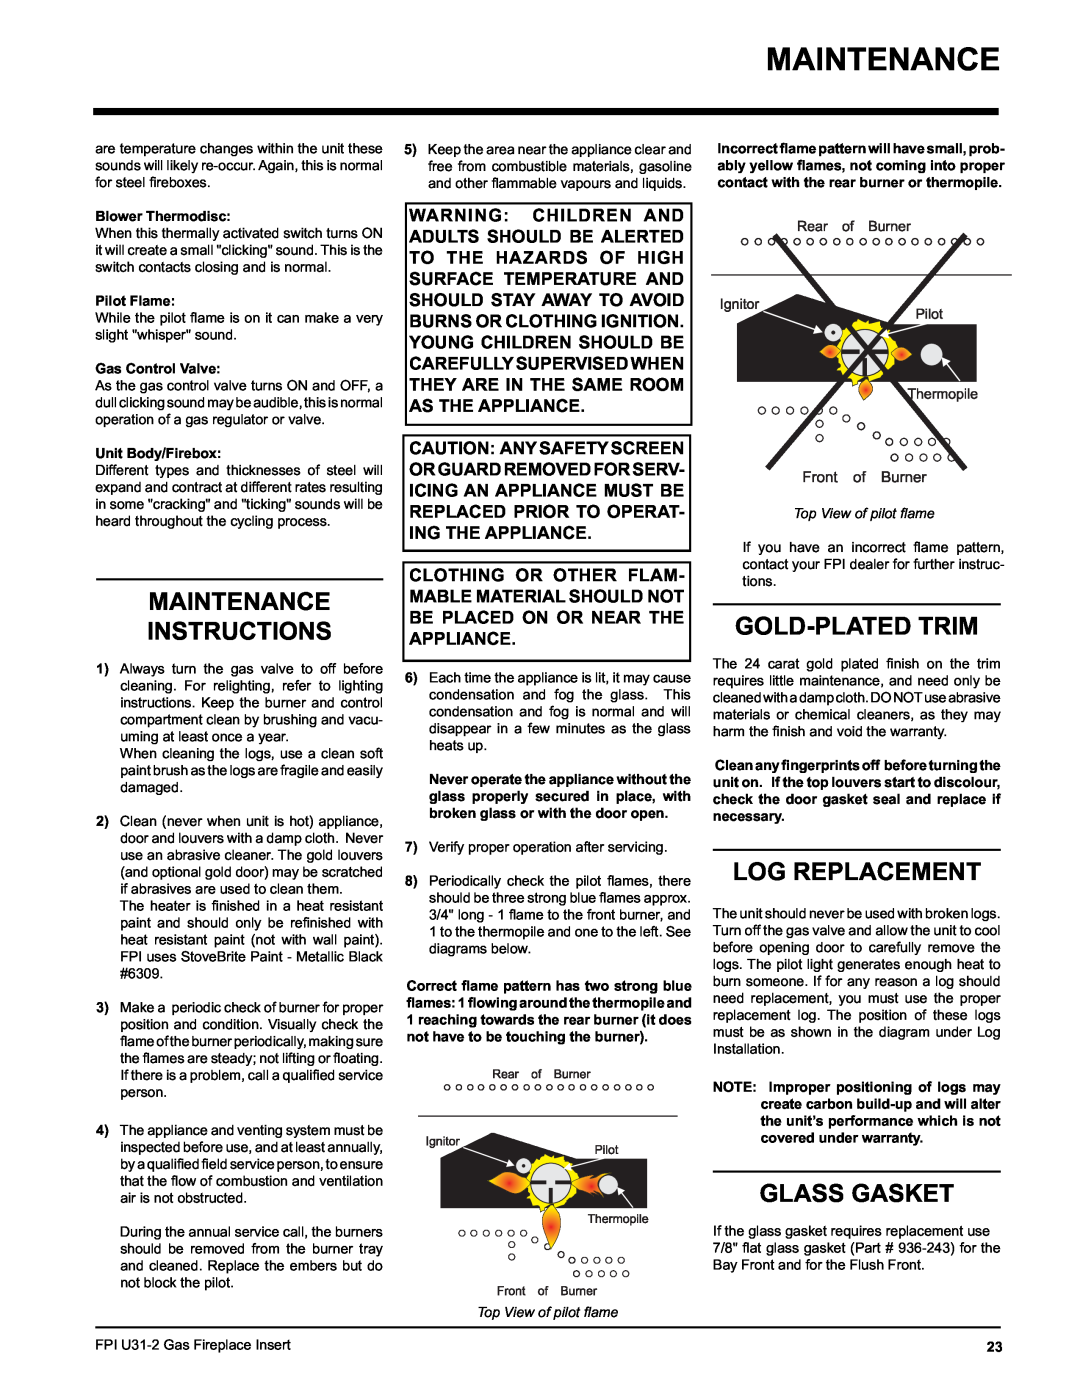 Recoton/Advent U31-LP2, U31-NG2 Maintenance Instructions, Gold-Platedtrim, Log Replacement, Glass Gasket 